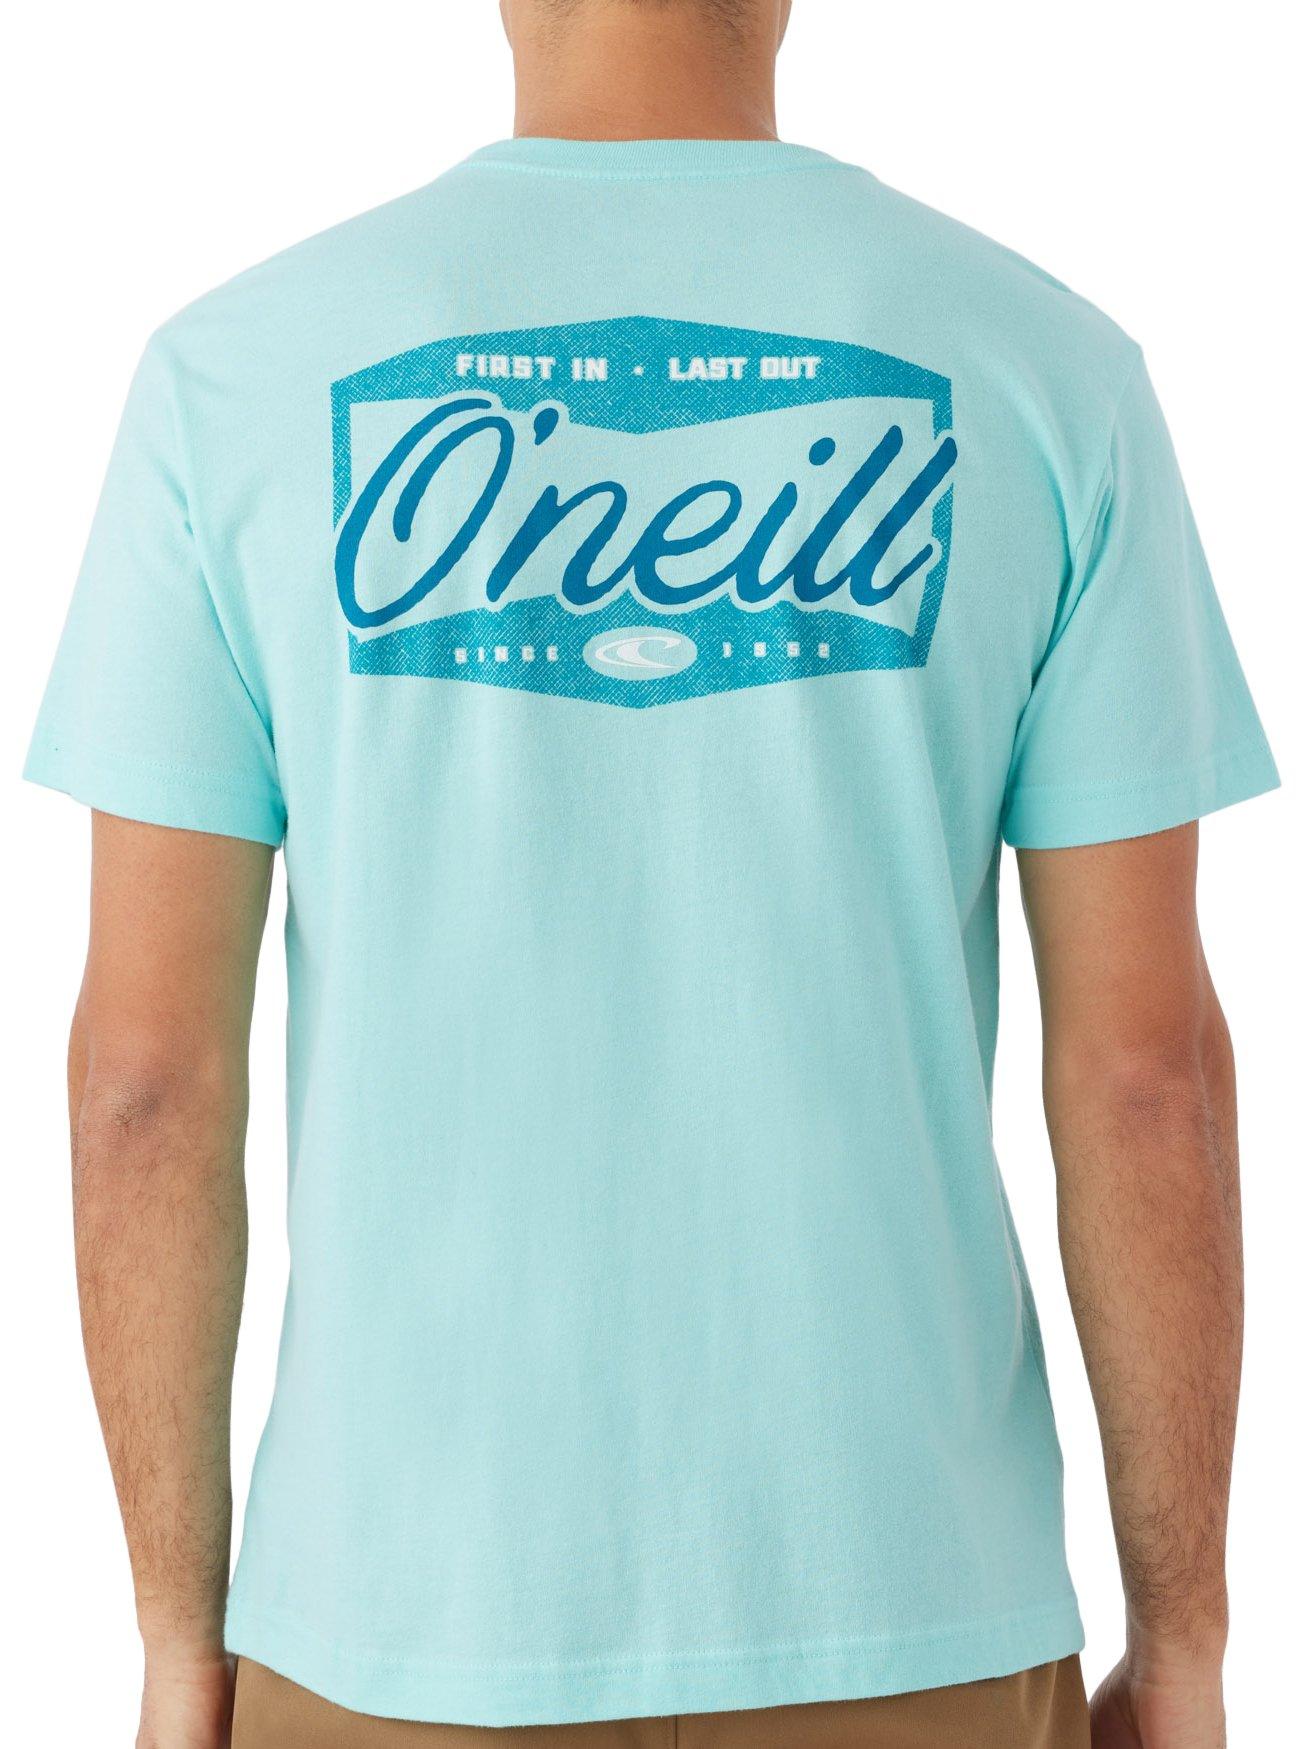 O'Neill Mens Spare Parts Short Sleeve T-Shirt